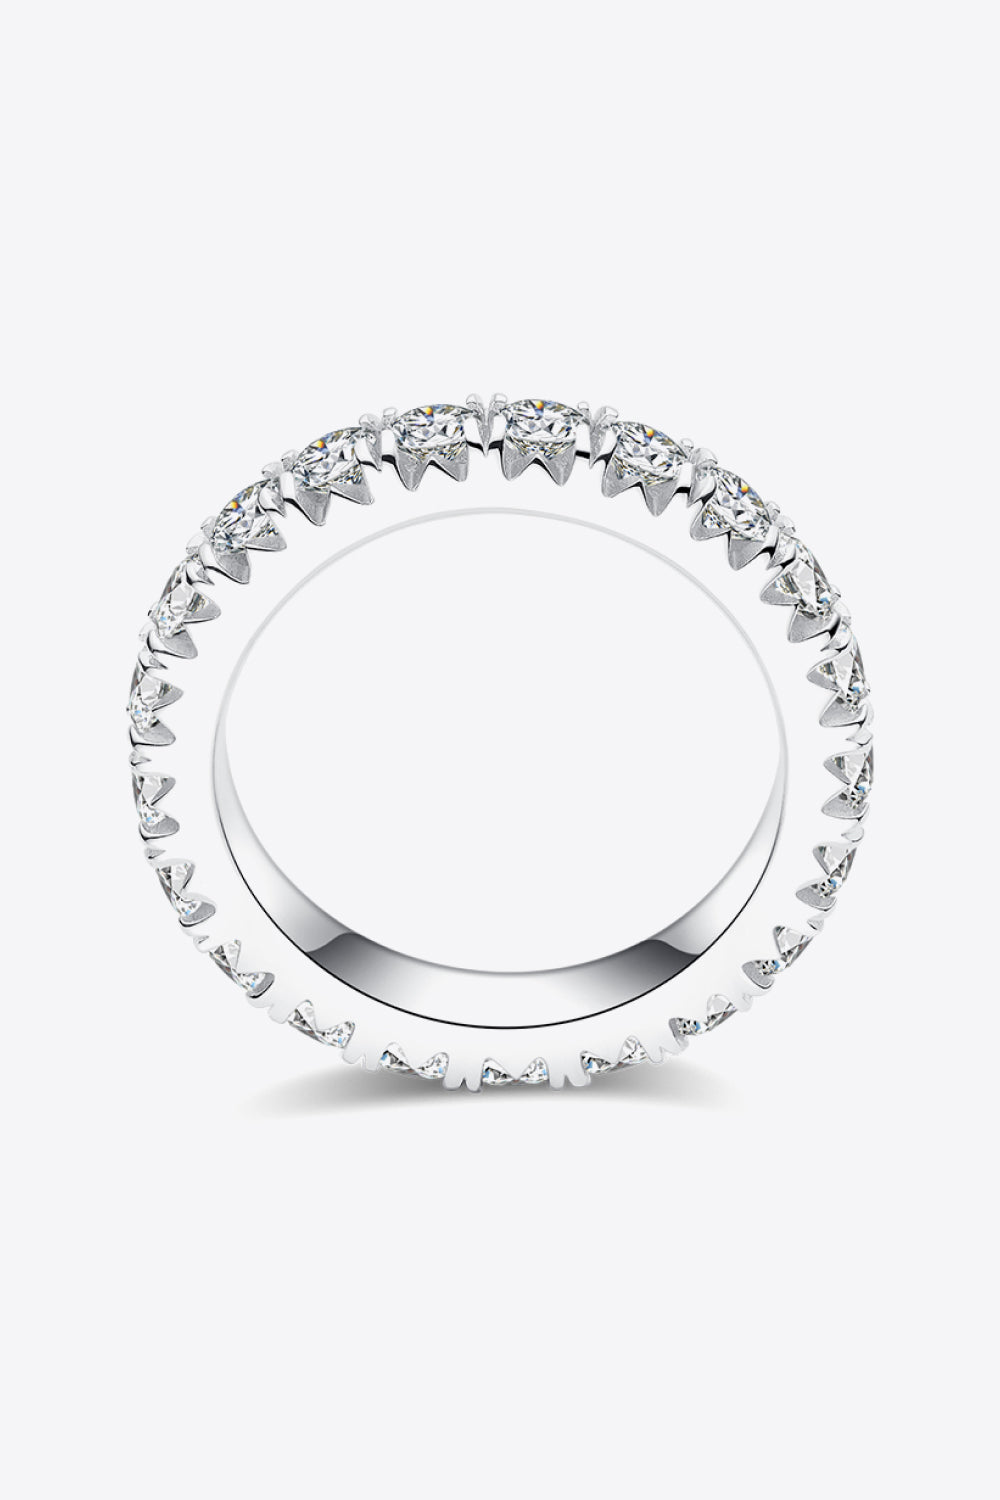 2.3 Carat Moissanite Eternity Ring (Platinum Over Pure Sterling Silver) - Sparkala